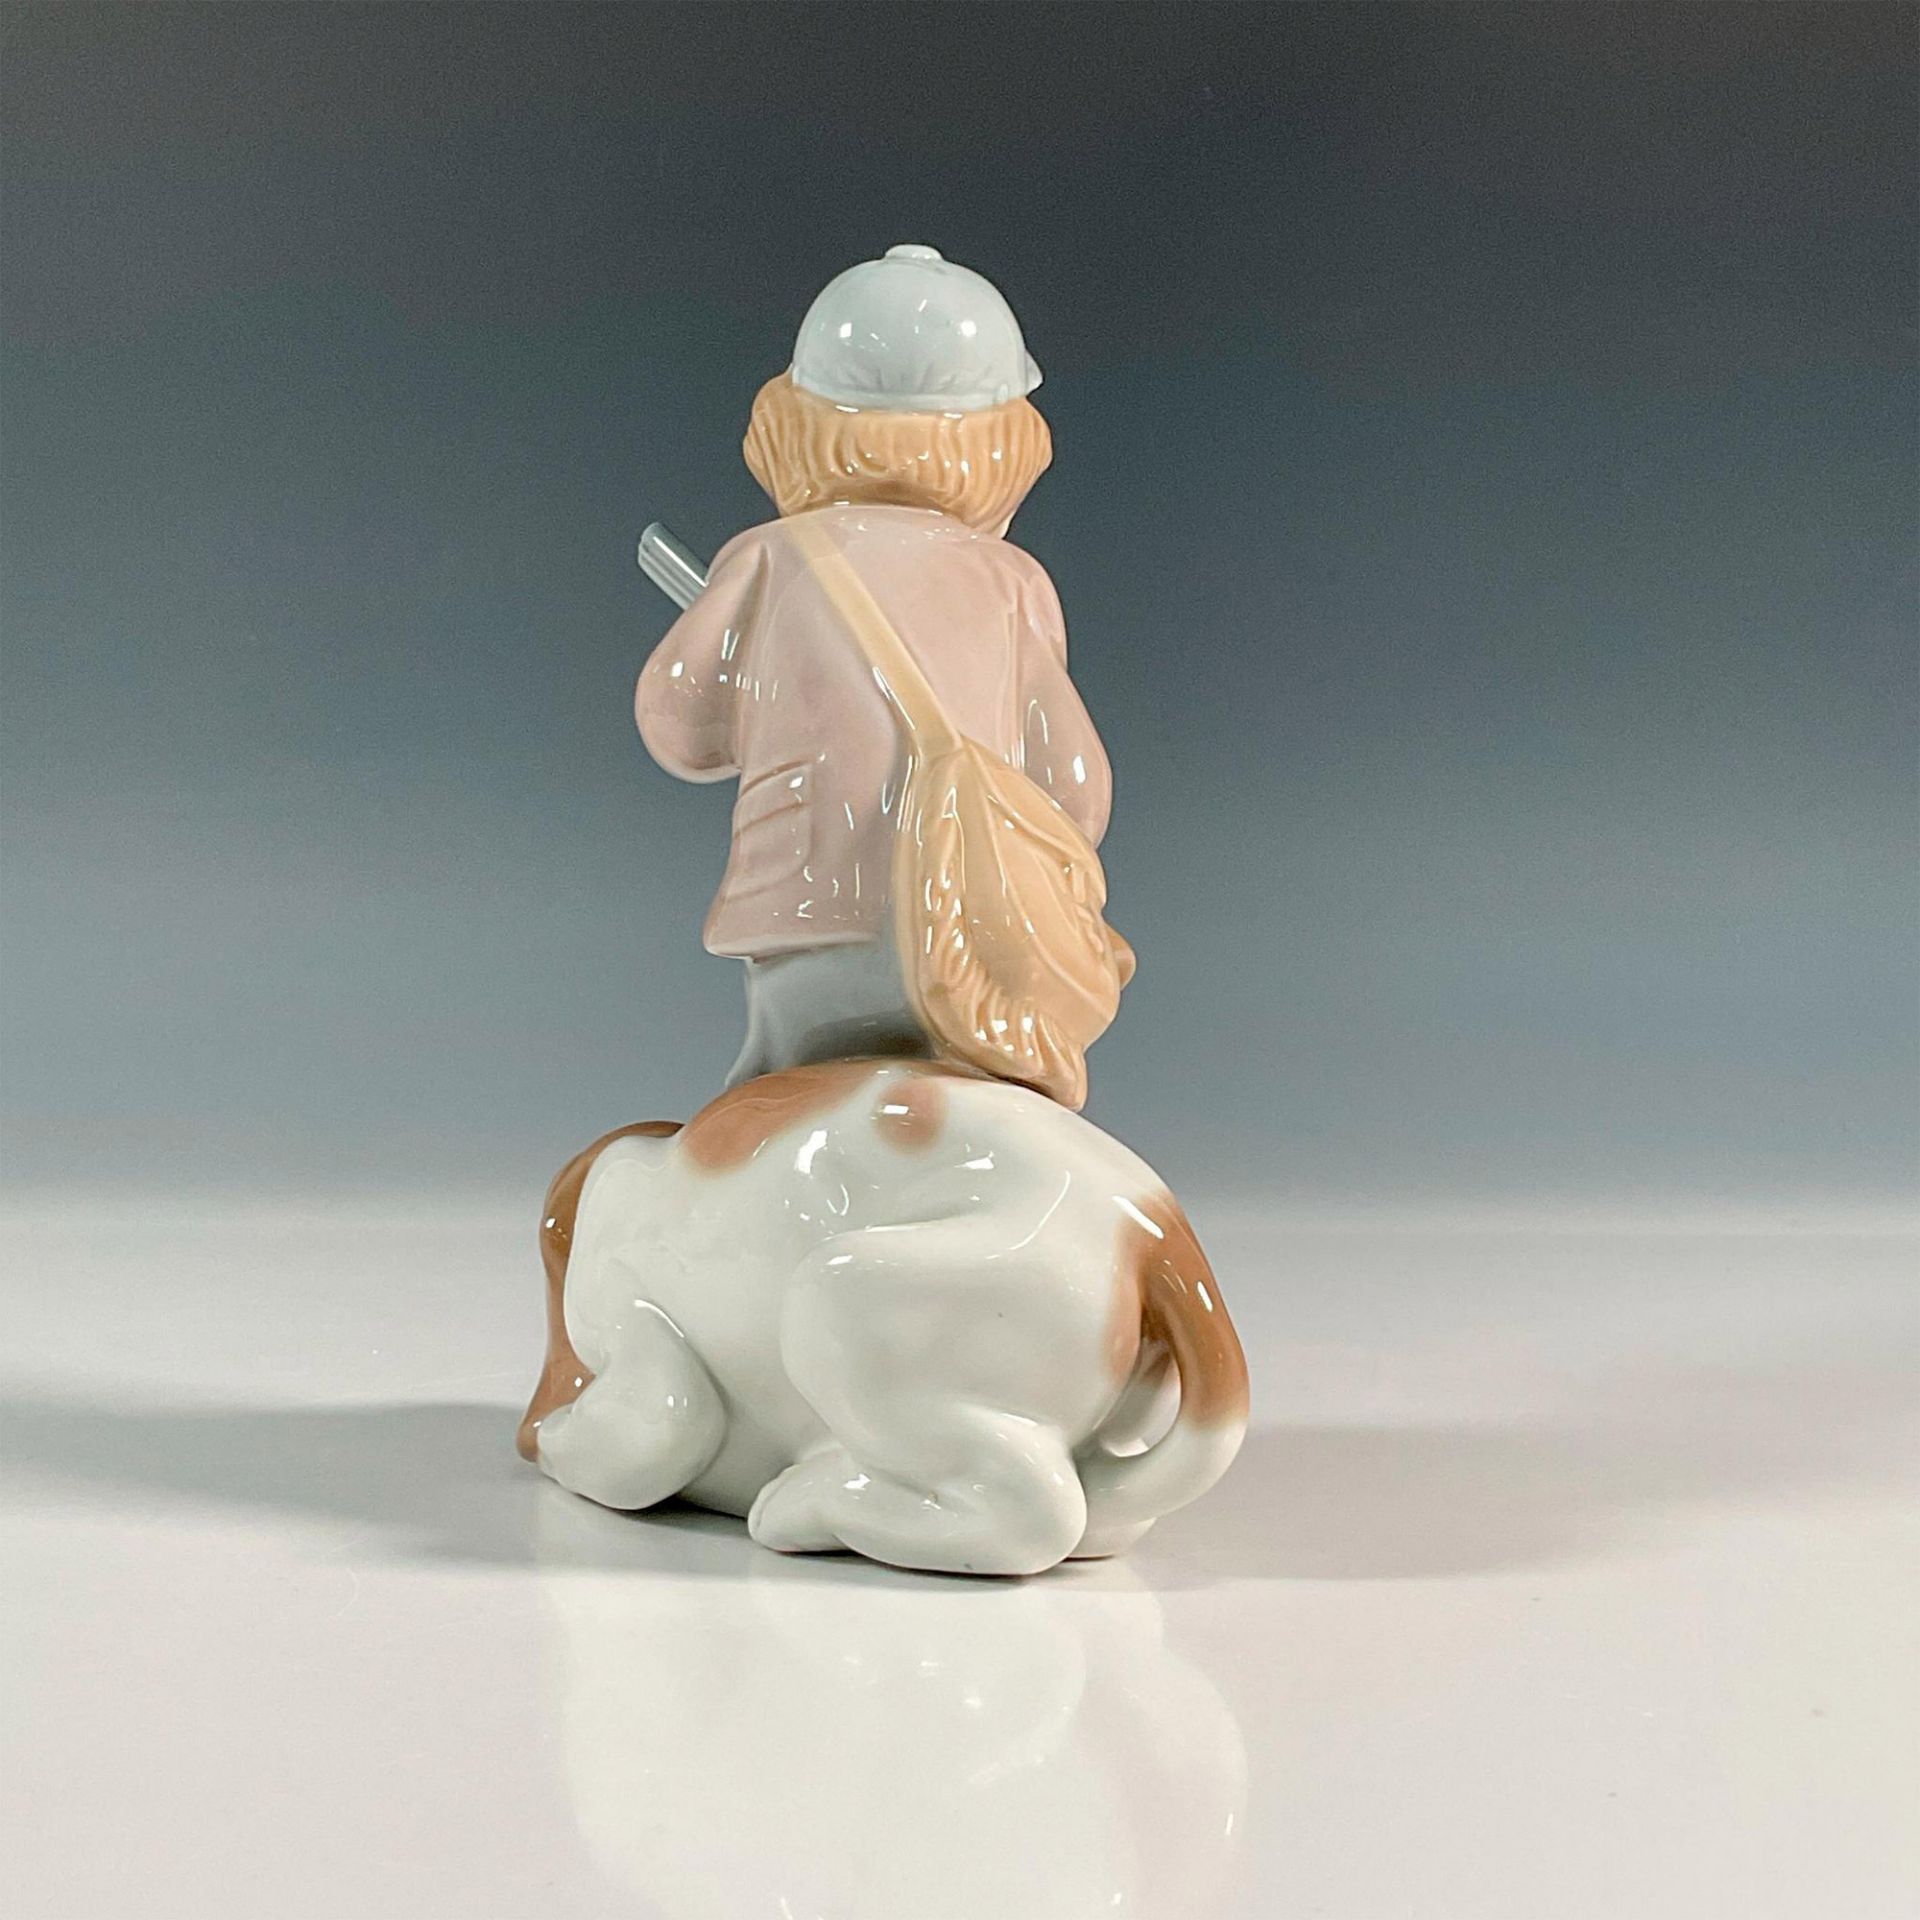 Hunter Puppet 1004971 - Lladro Porcelain Figurine - Image 2 of 3